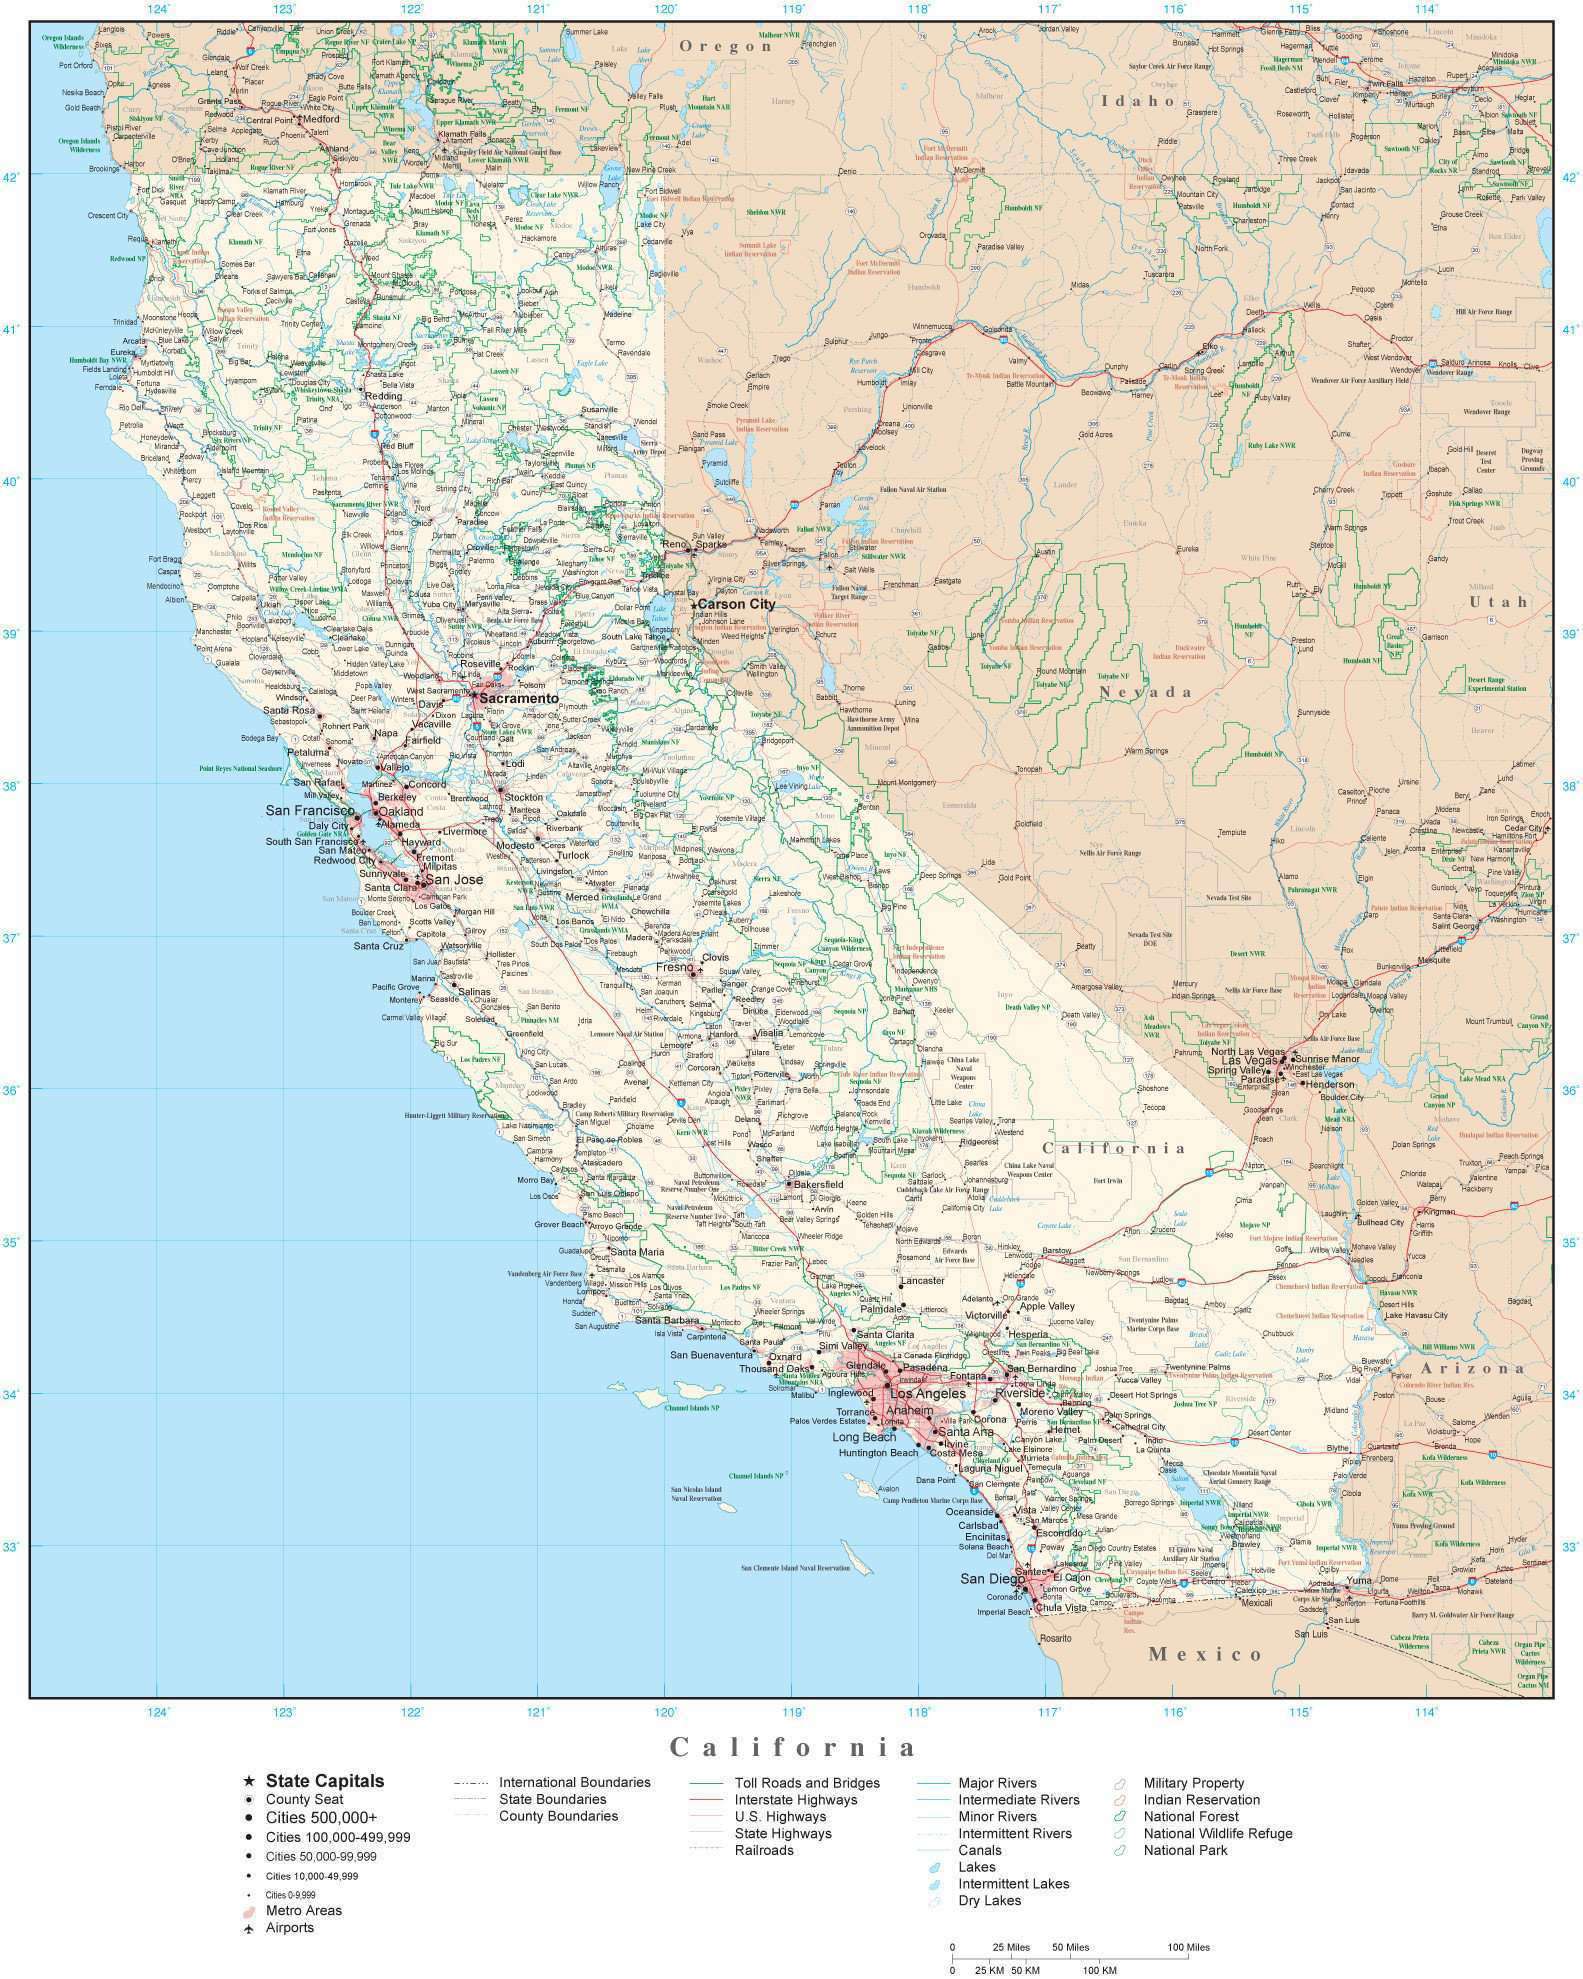 California Detailed Map in Adobe Illustrator vector format. Detailed ...